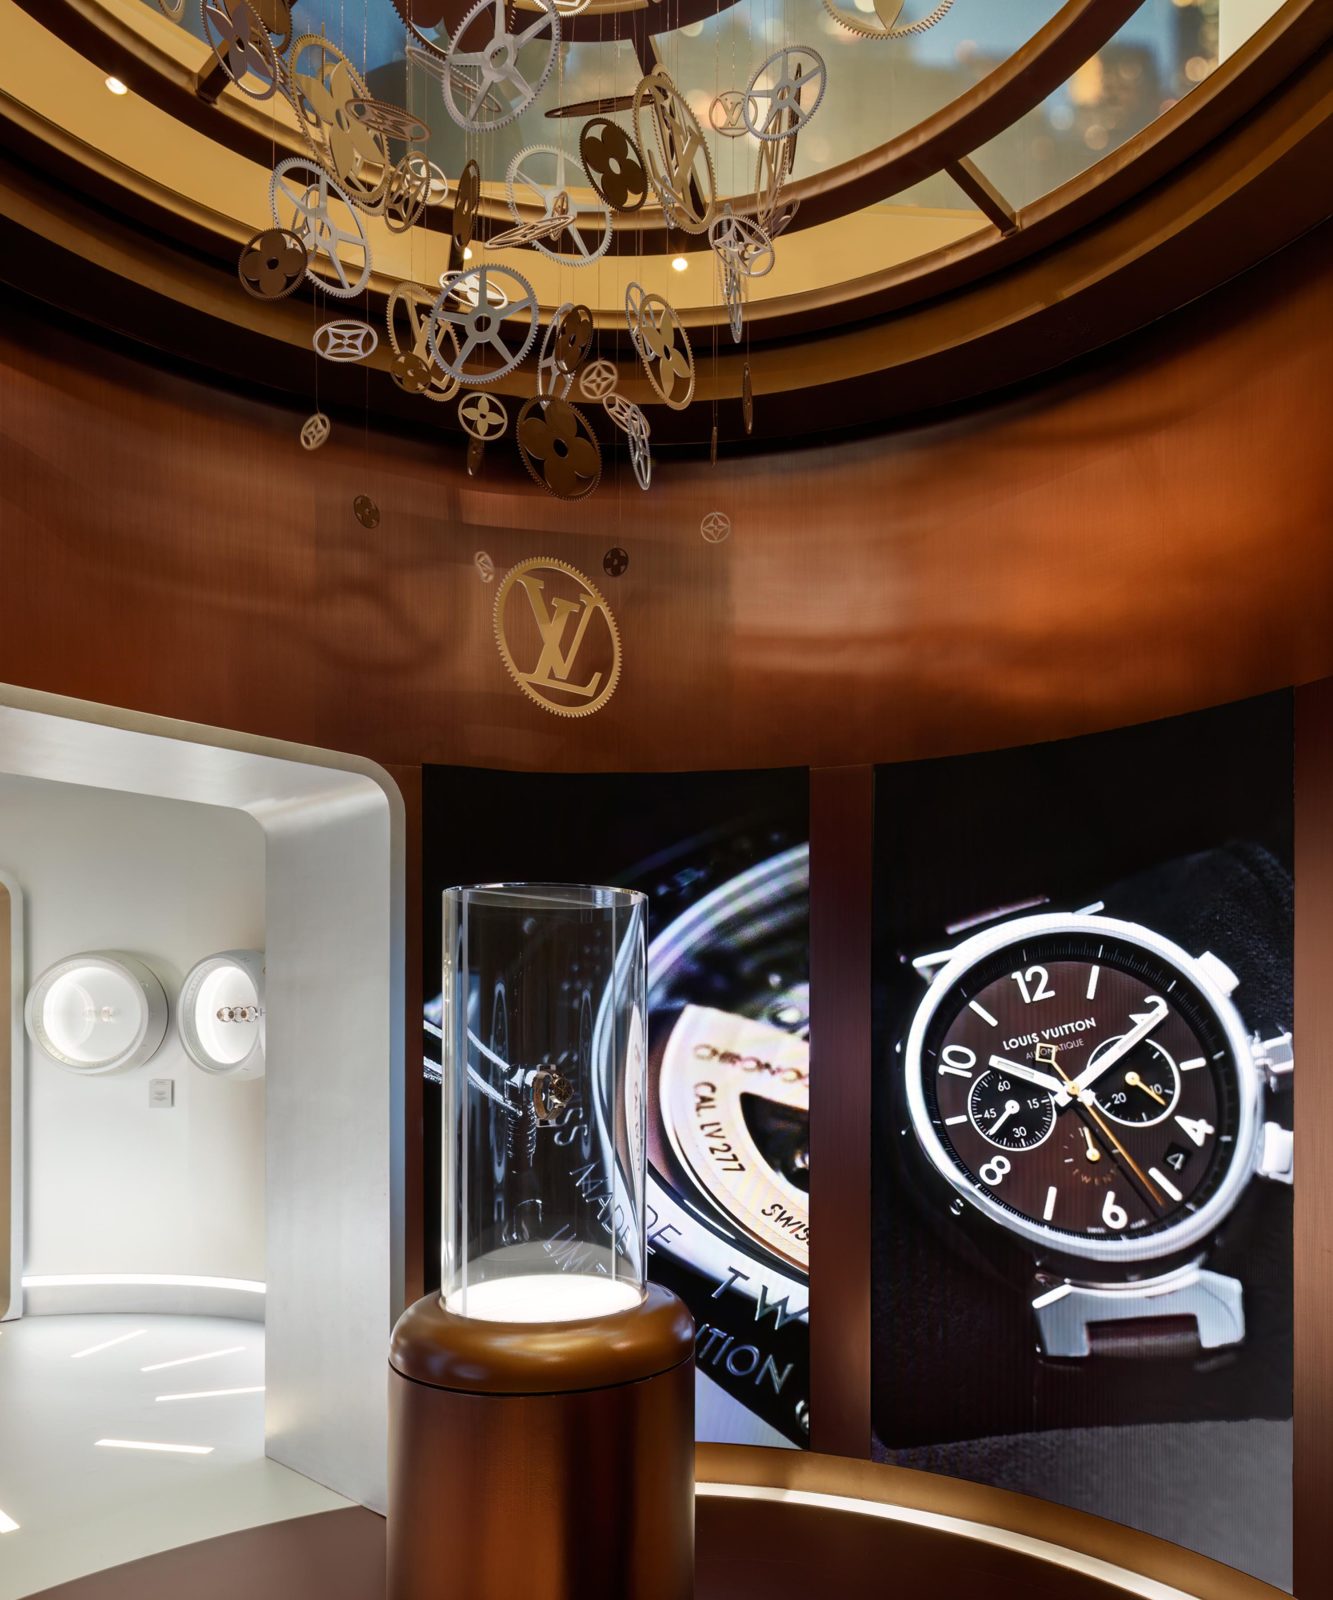 Louis Vuitton's Tambour gets a facelift, Lifestyle - THE BUSINESS